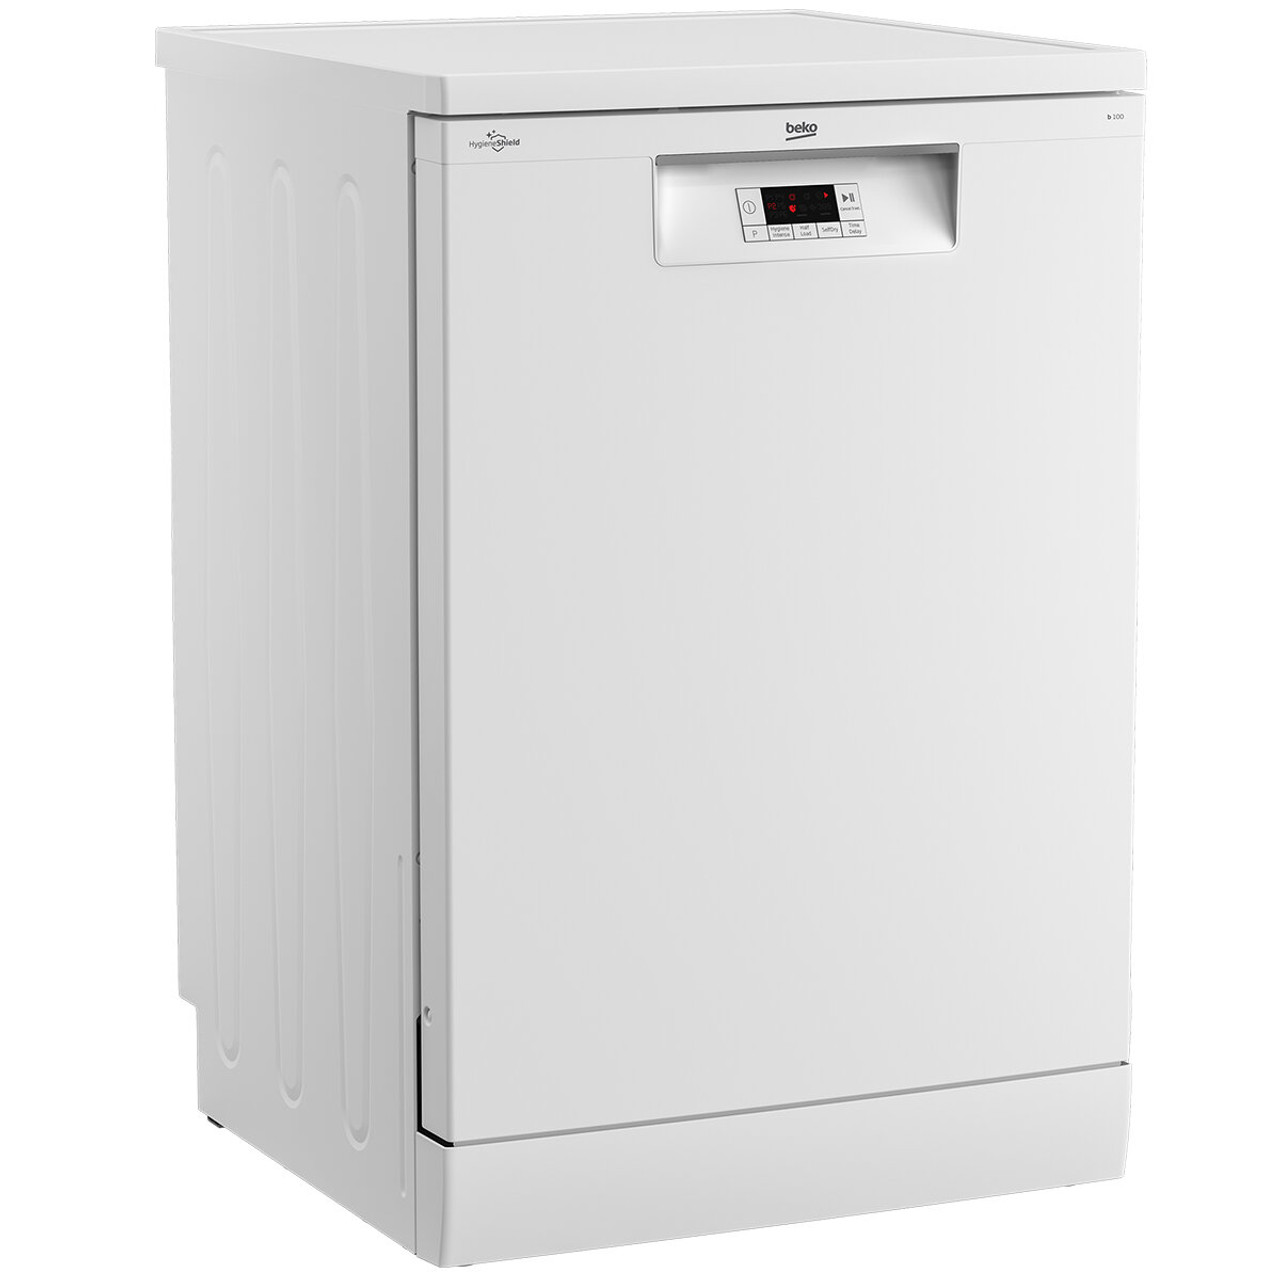 BDFB1410W - Freestanding Dishwasher 14 Place - White